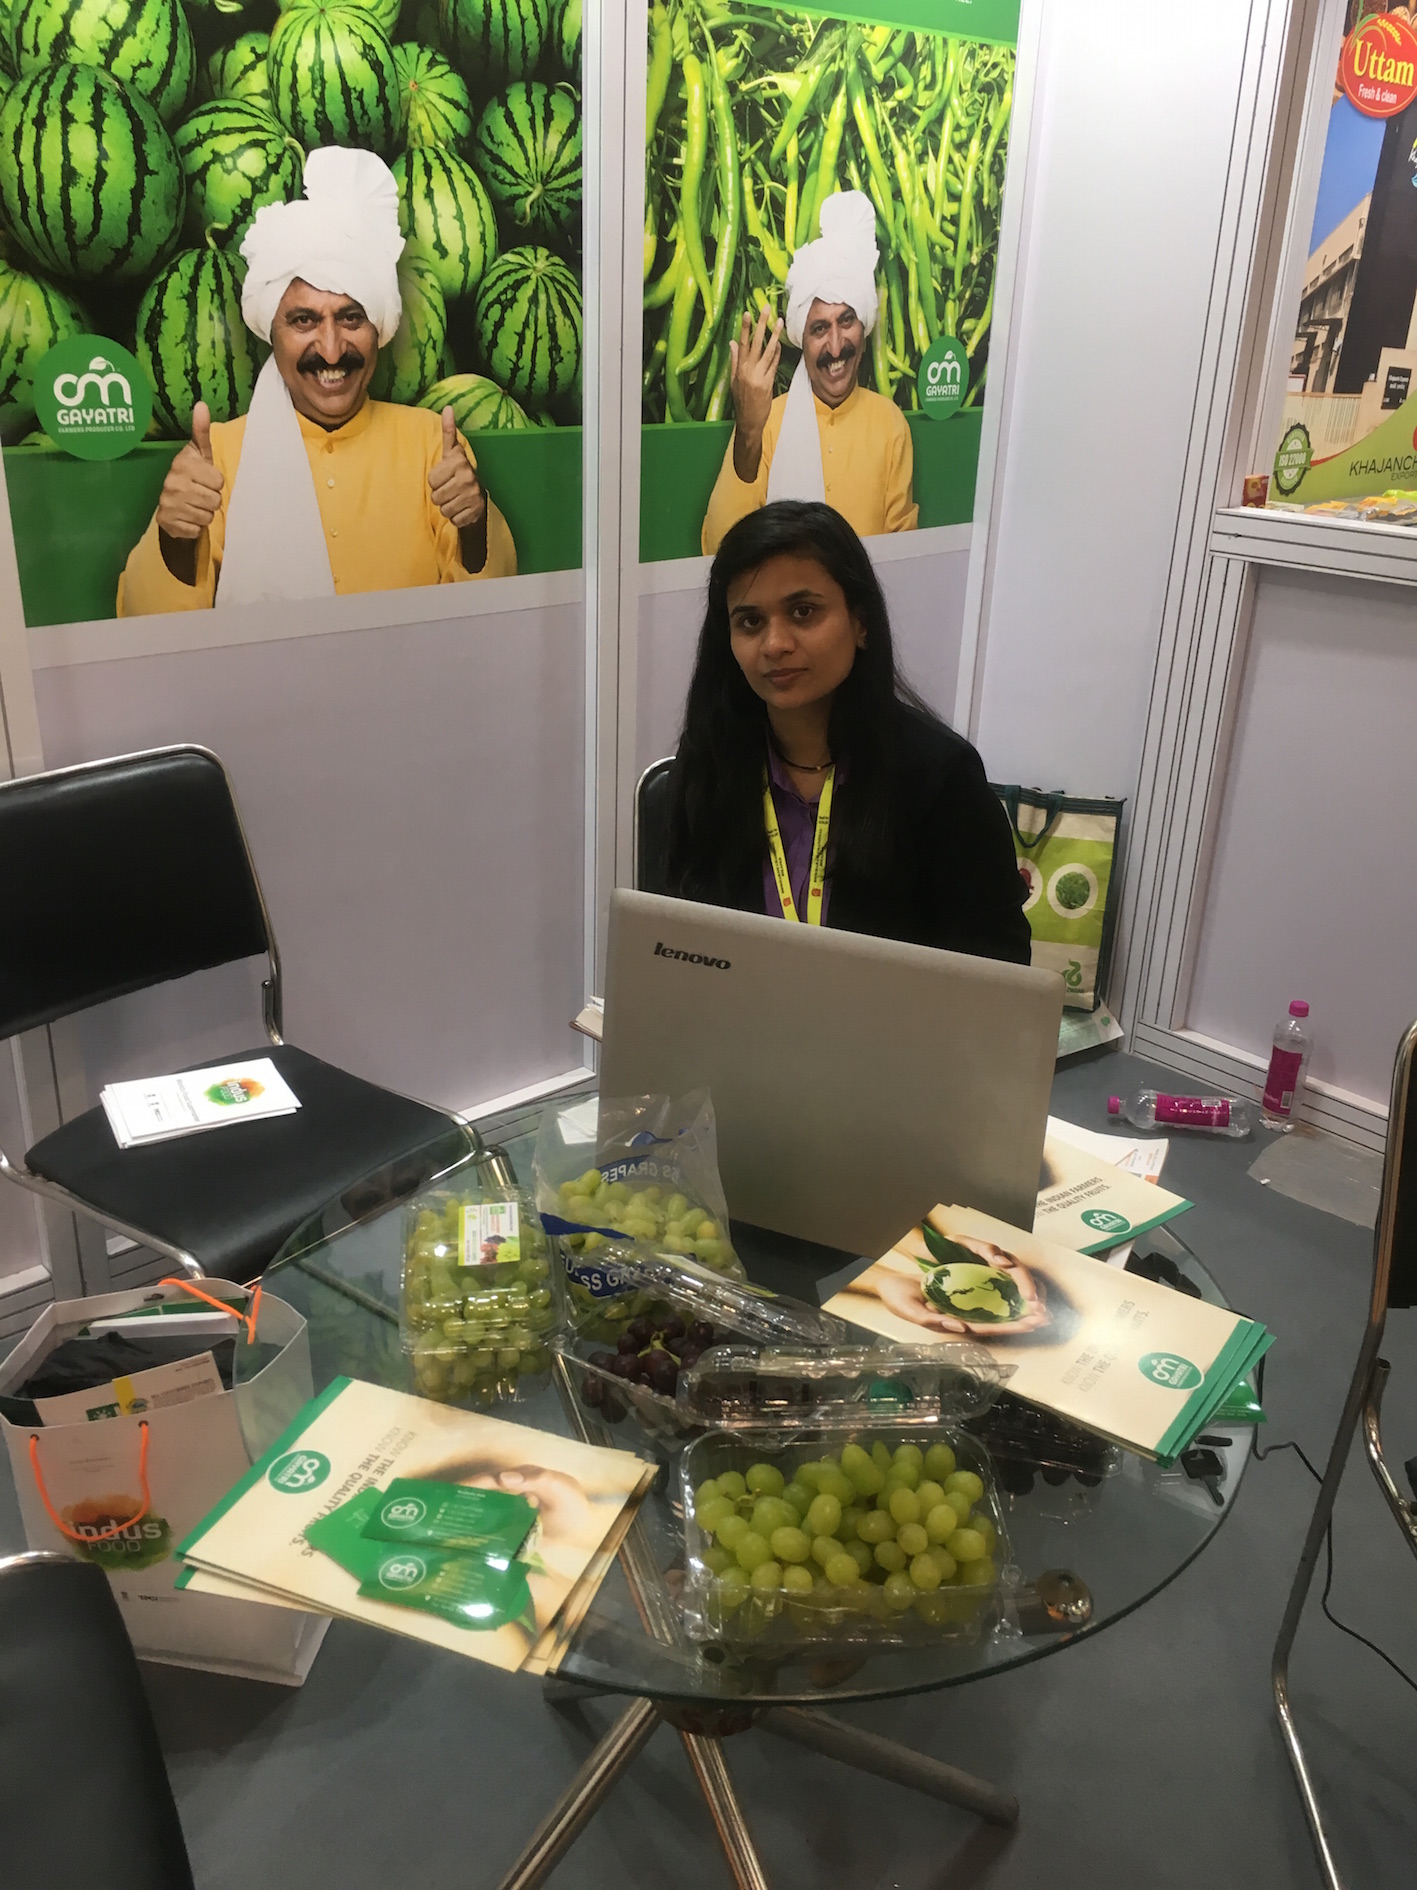 Om Gayatri (India), a consortium of fruit growers